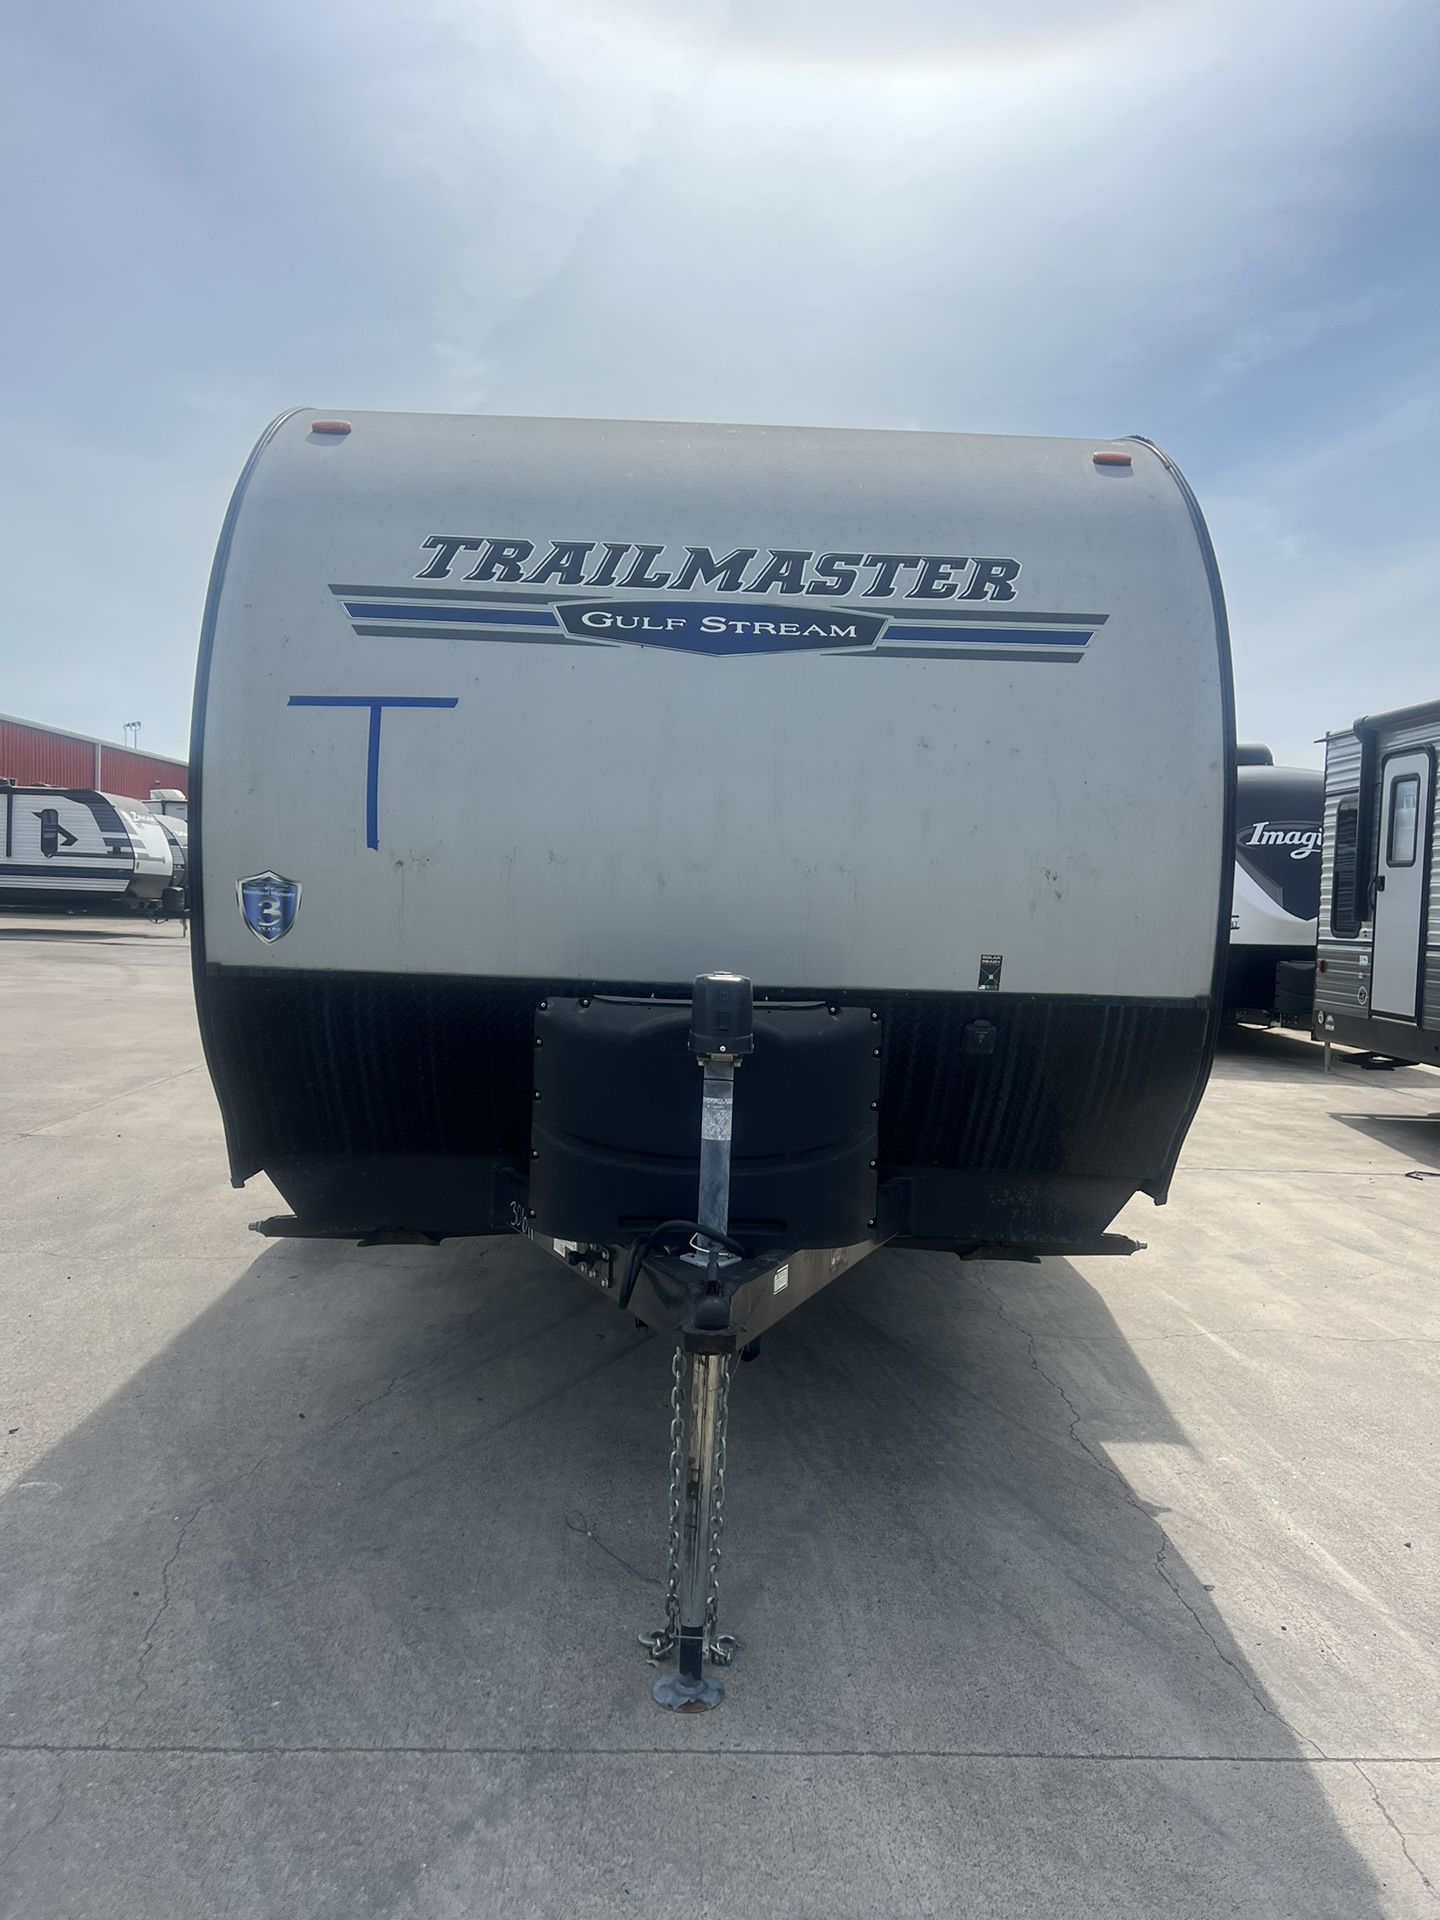 2020 Trailmaster 274 bhs